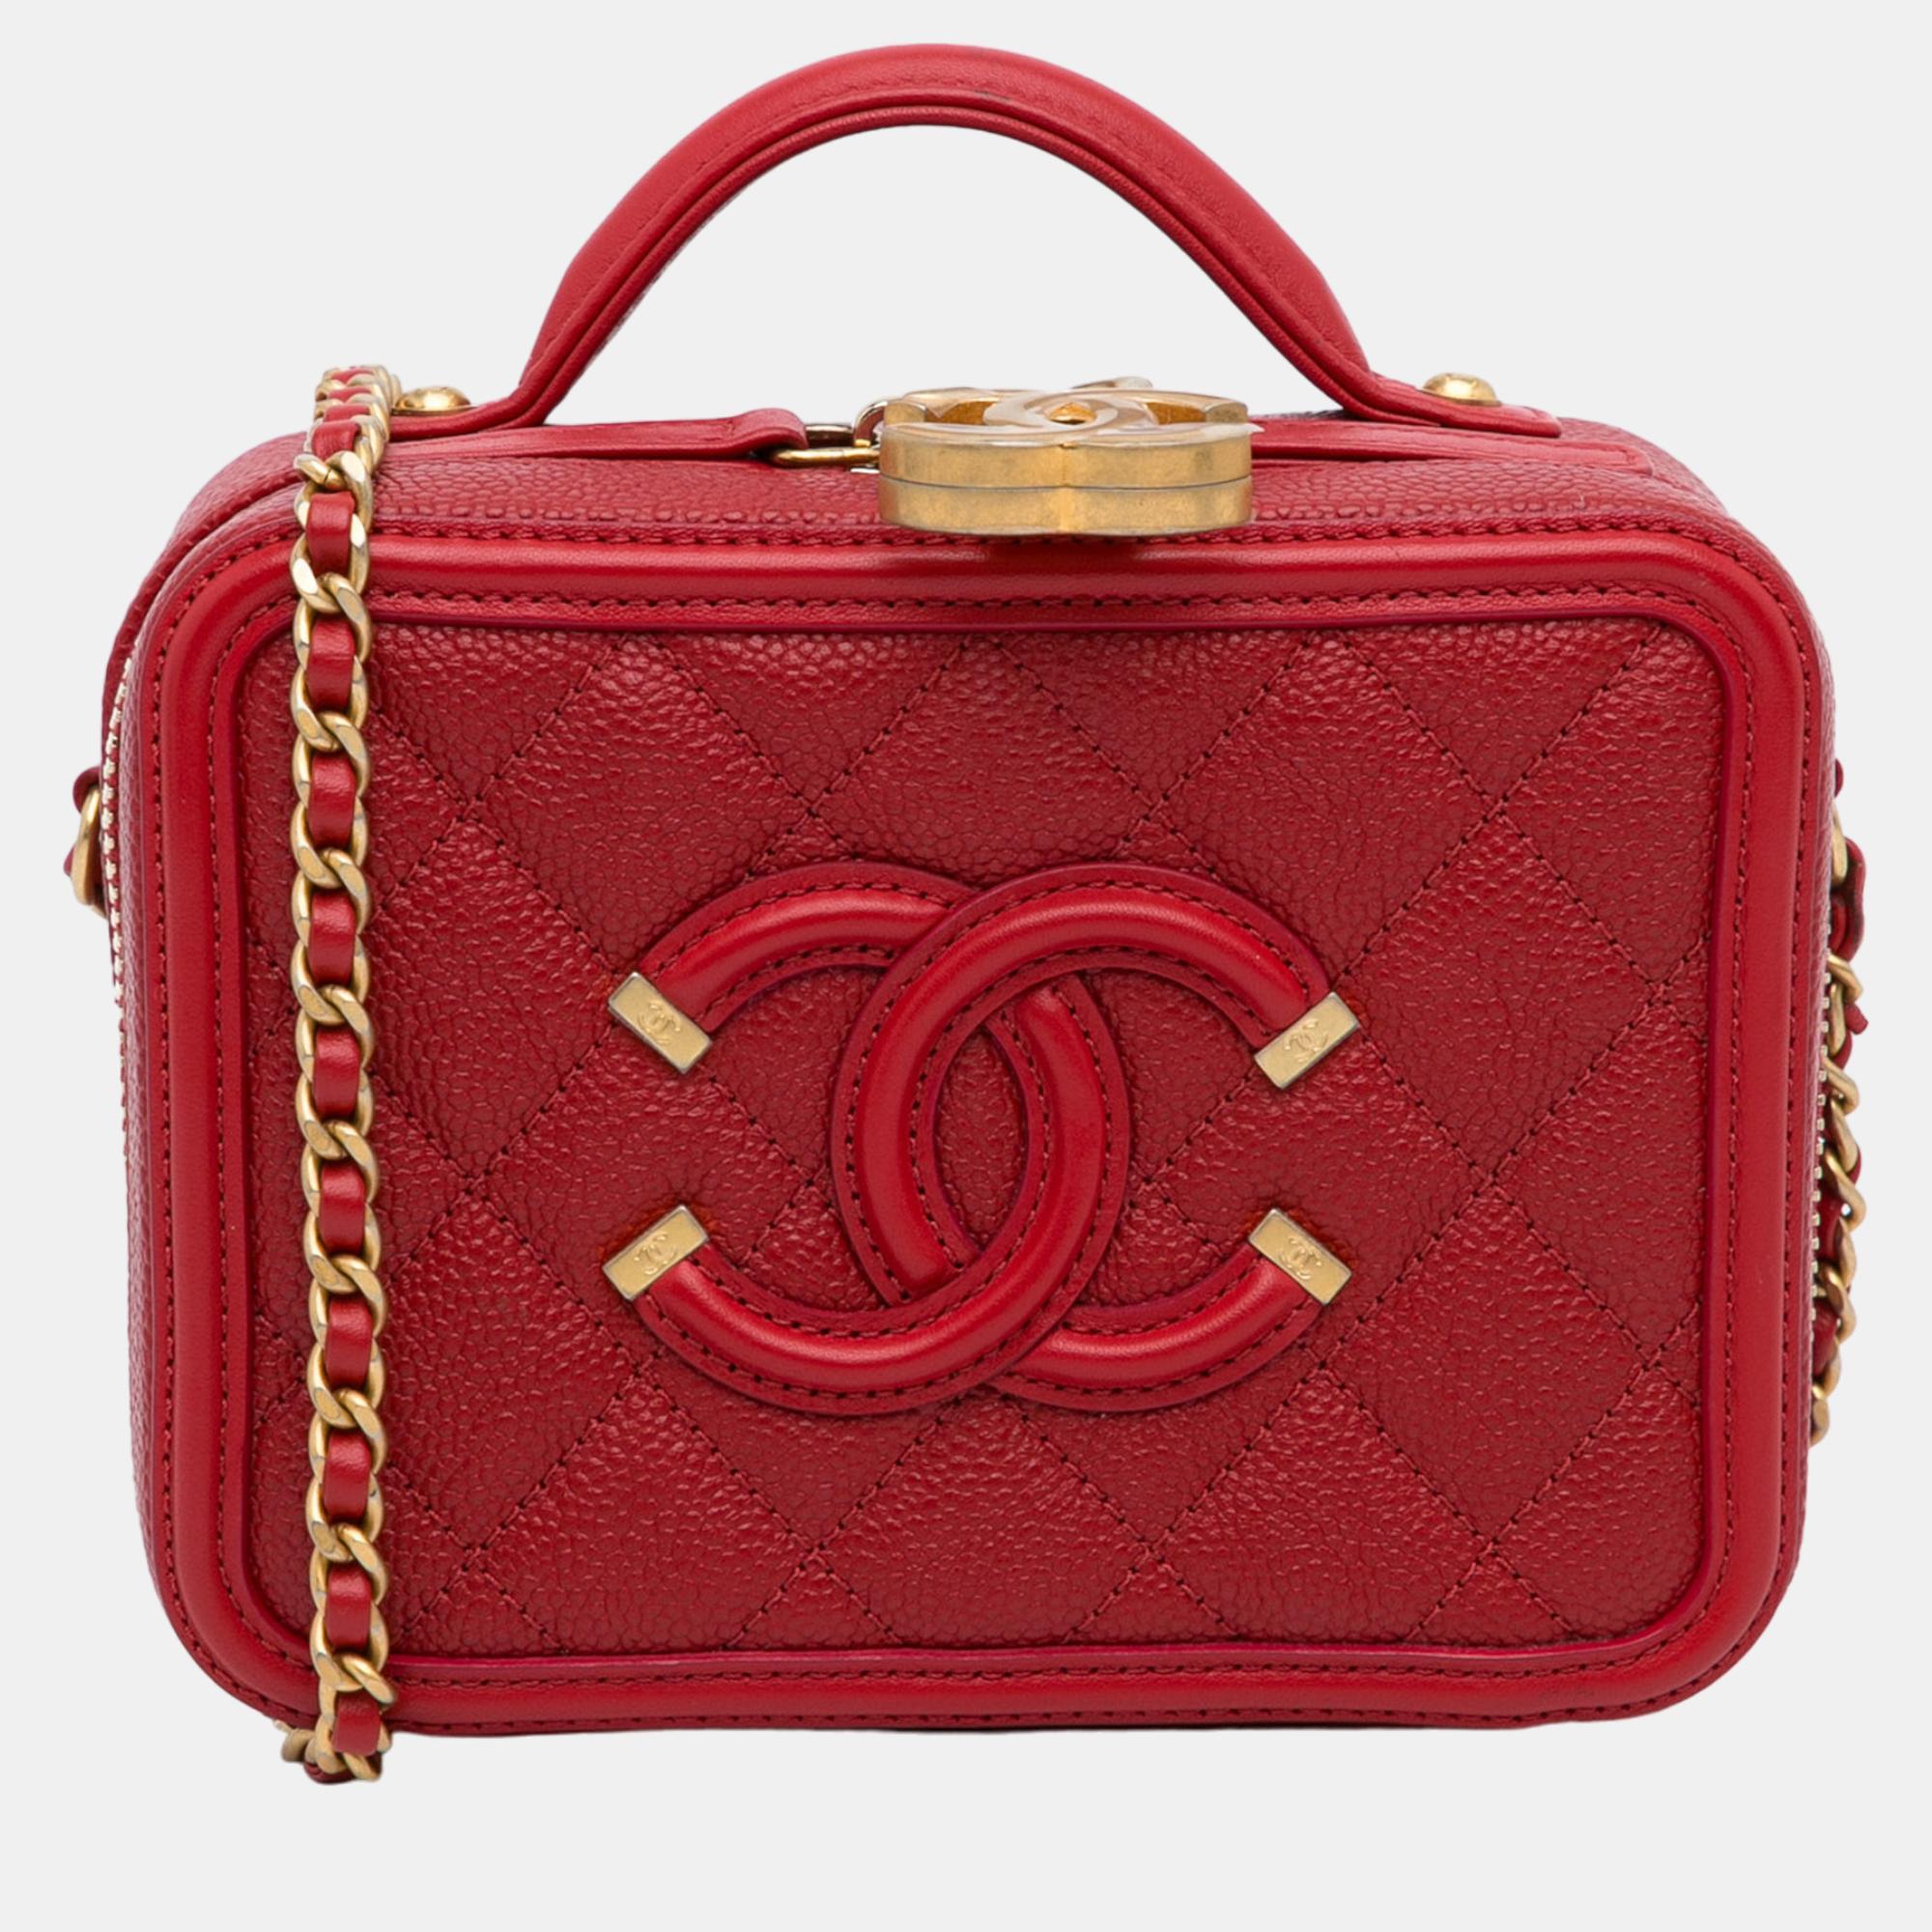 Chanel red small caviar cc filigree vanity bag